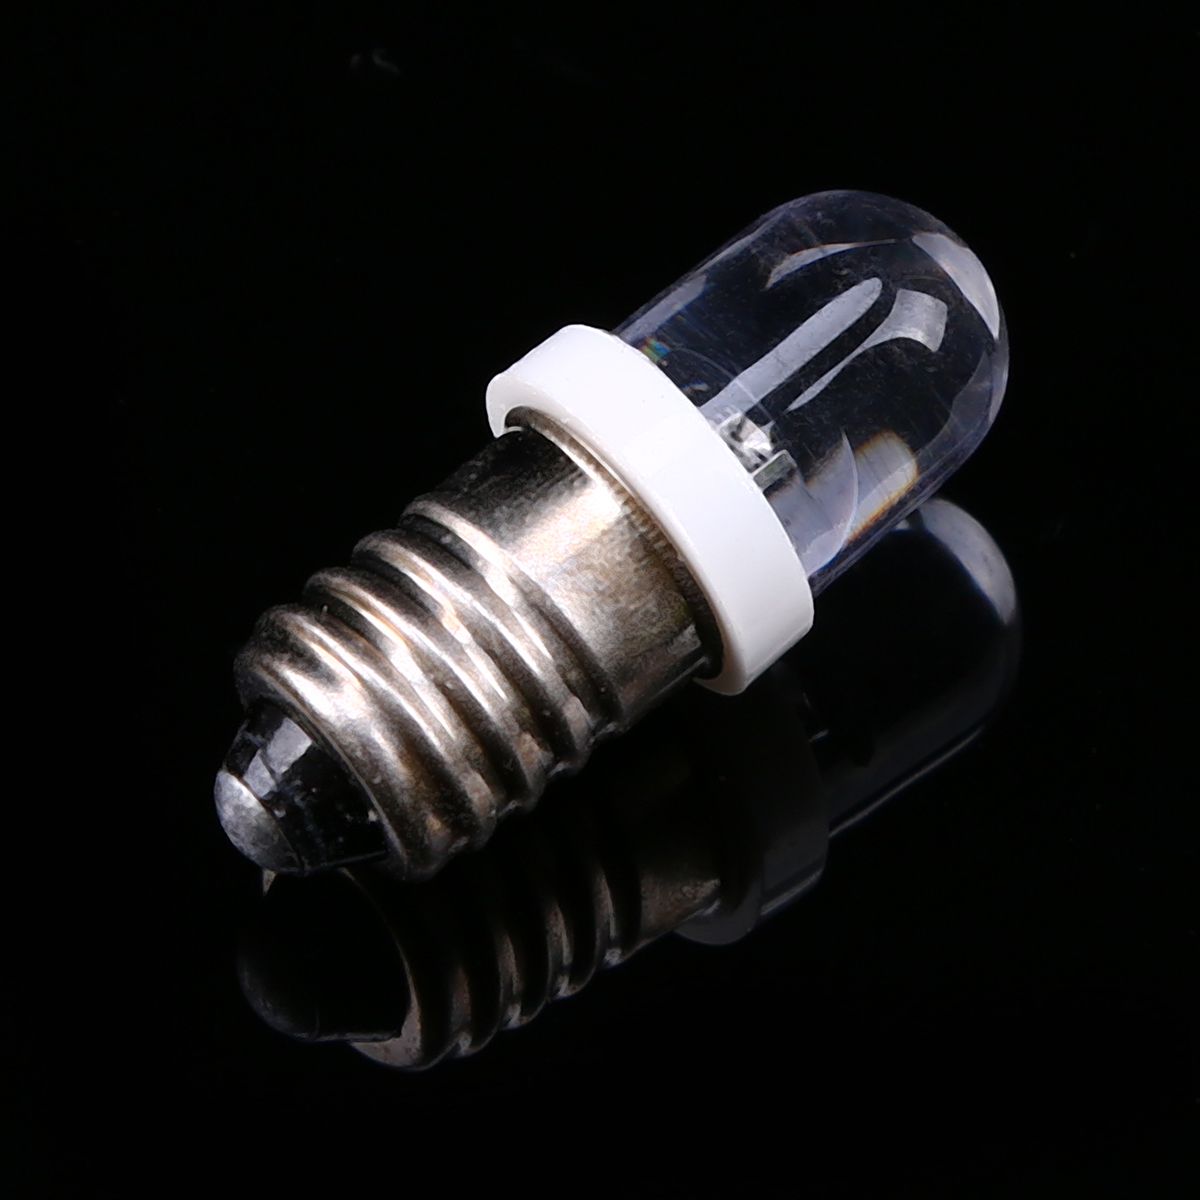 1x New E10 LED Screw Base Indicator Bulb 6/12/24V DC Illumination Lamp Lights